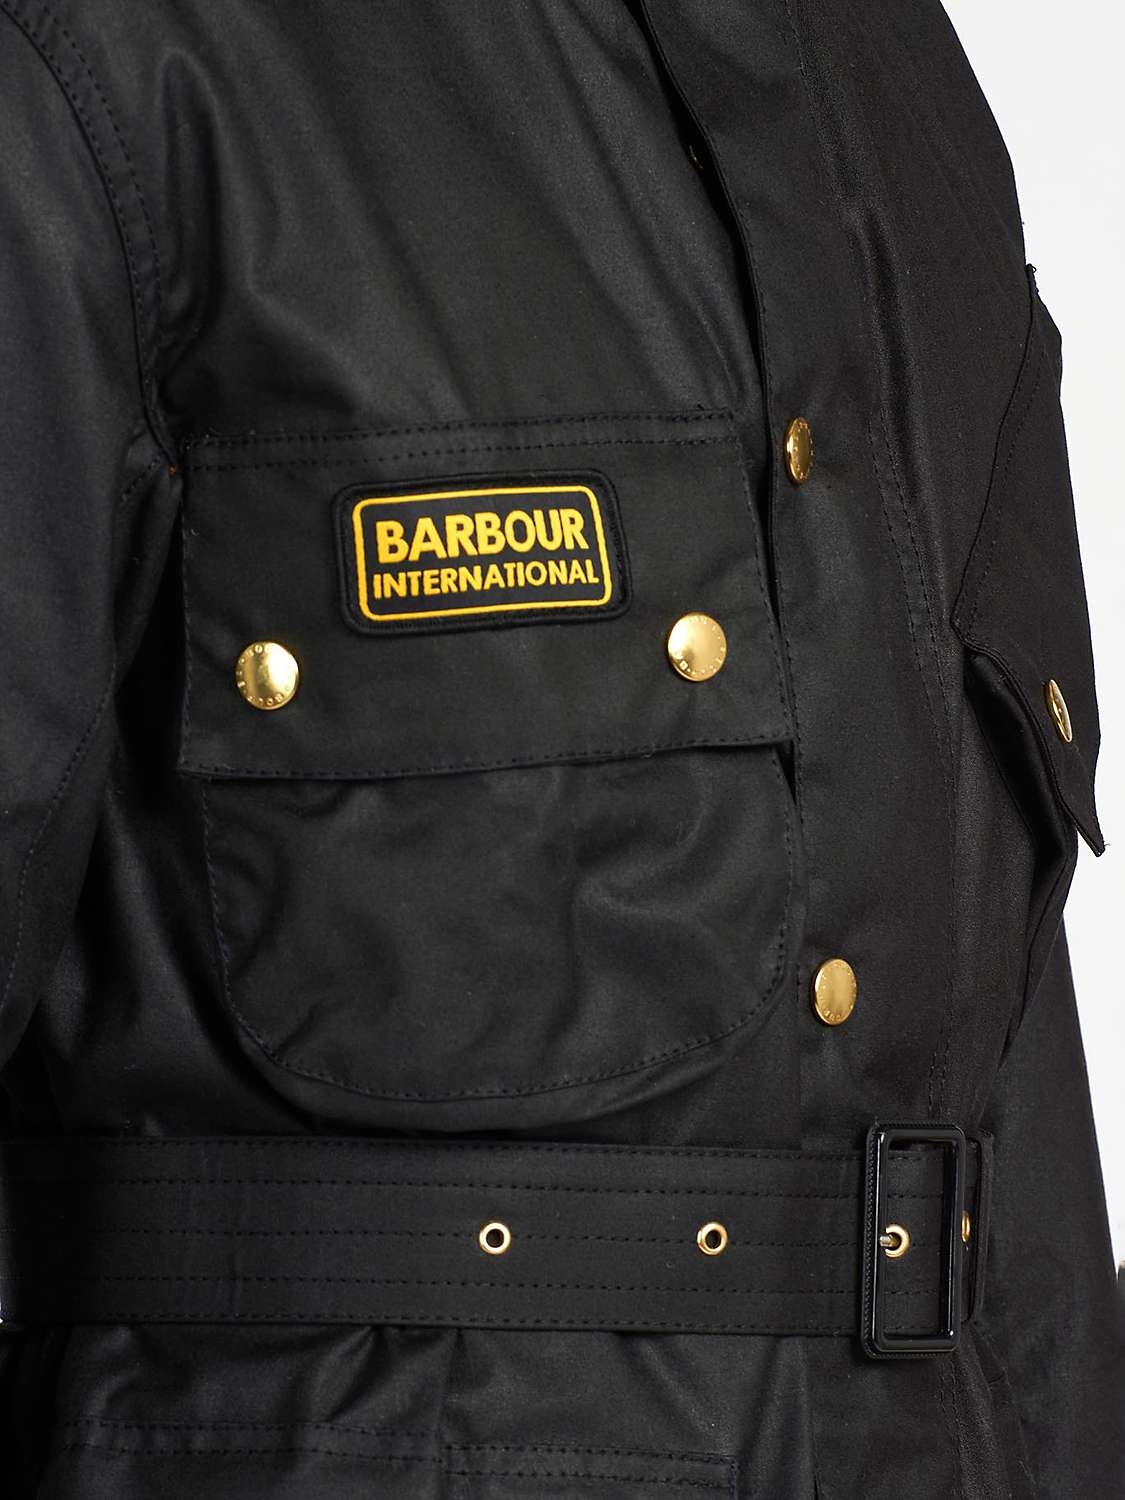 Buy Barbour International Original Waxed Cotton Jacket Online at johnlewis.com